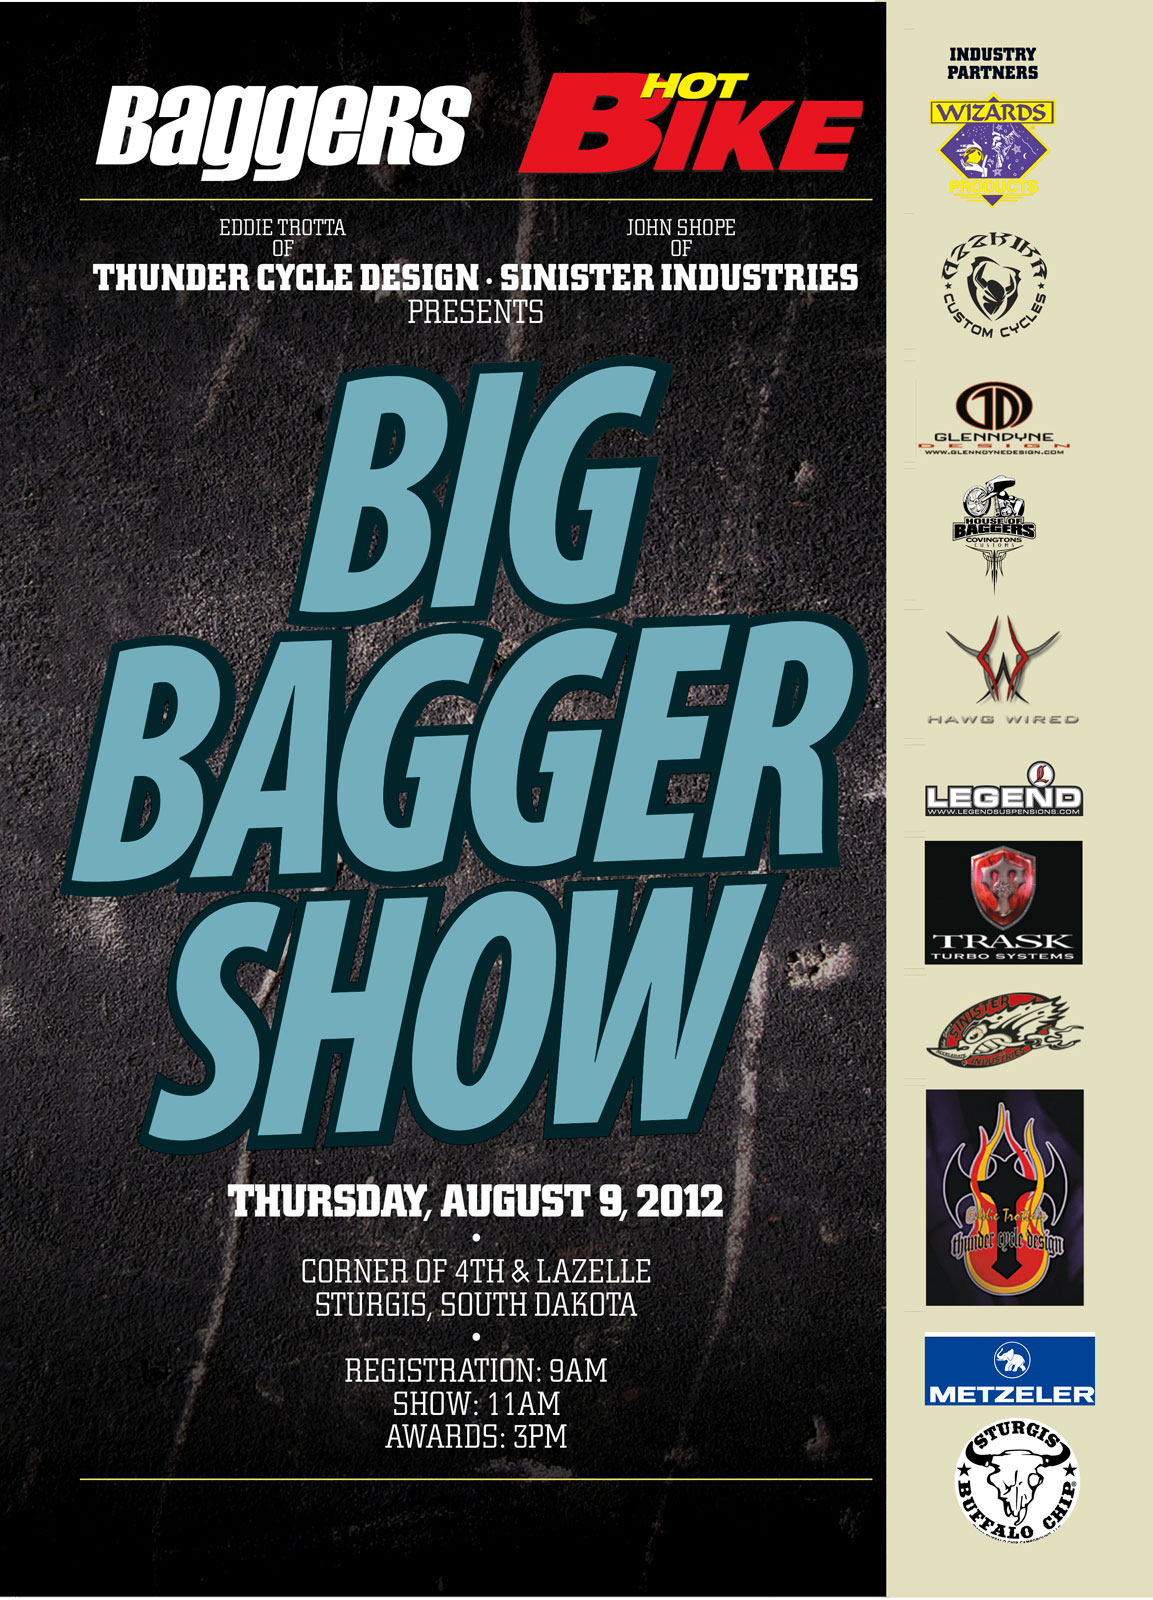 Big Bagger Show - Hot Bike Magazine